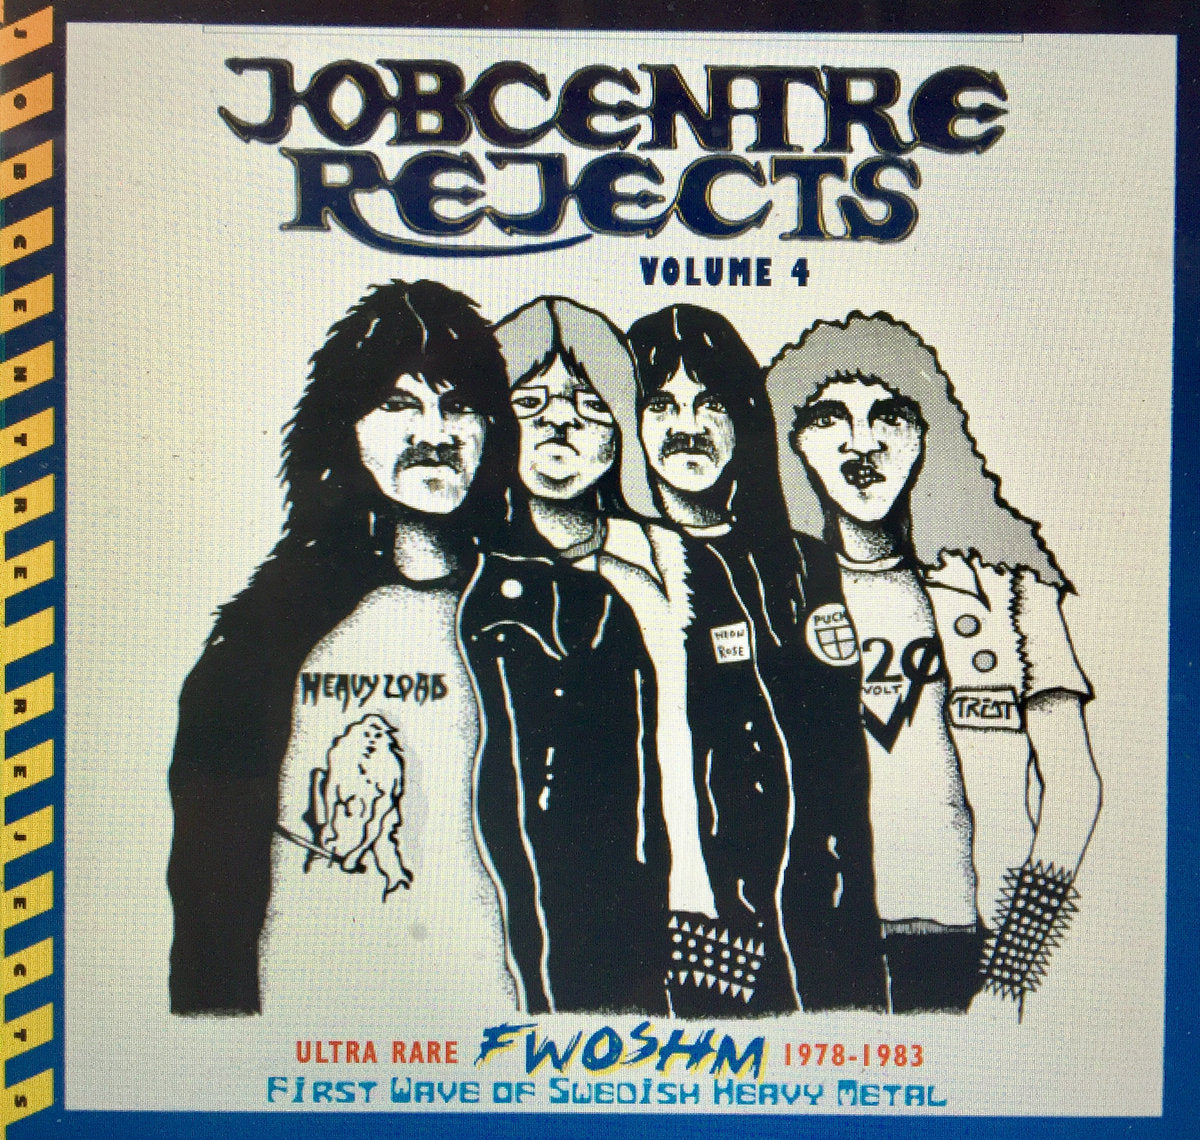 VARIOUS ARTISTS - Job Centre Rejects Vol. 4: Ultra Rare FWOSHM 1978-1983 - LP - Vinyl